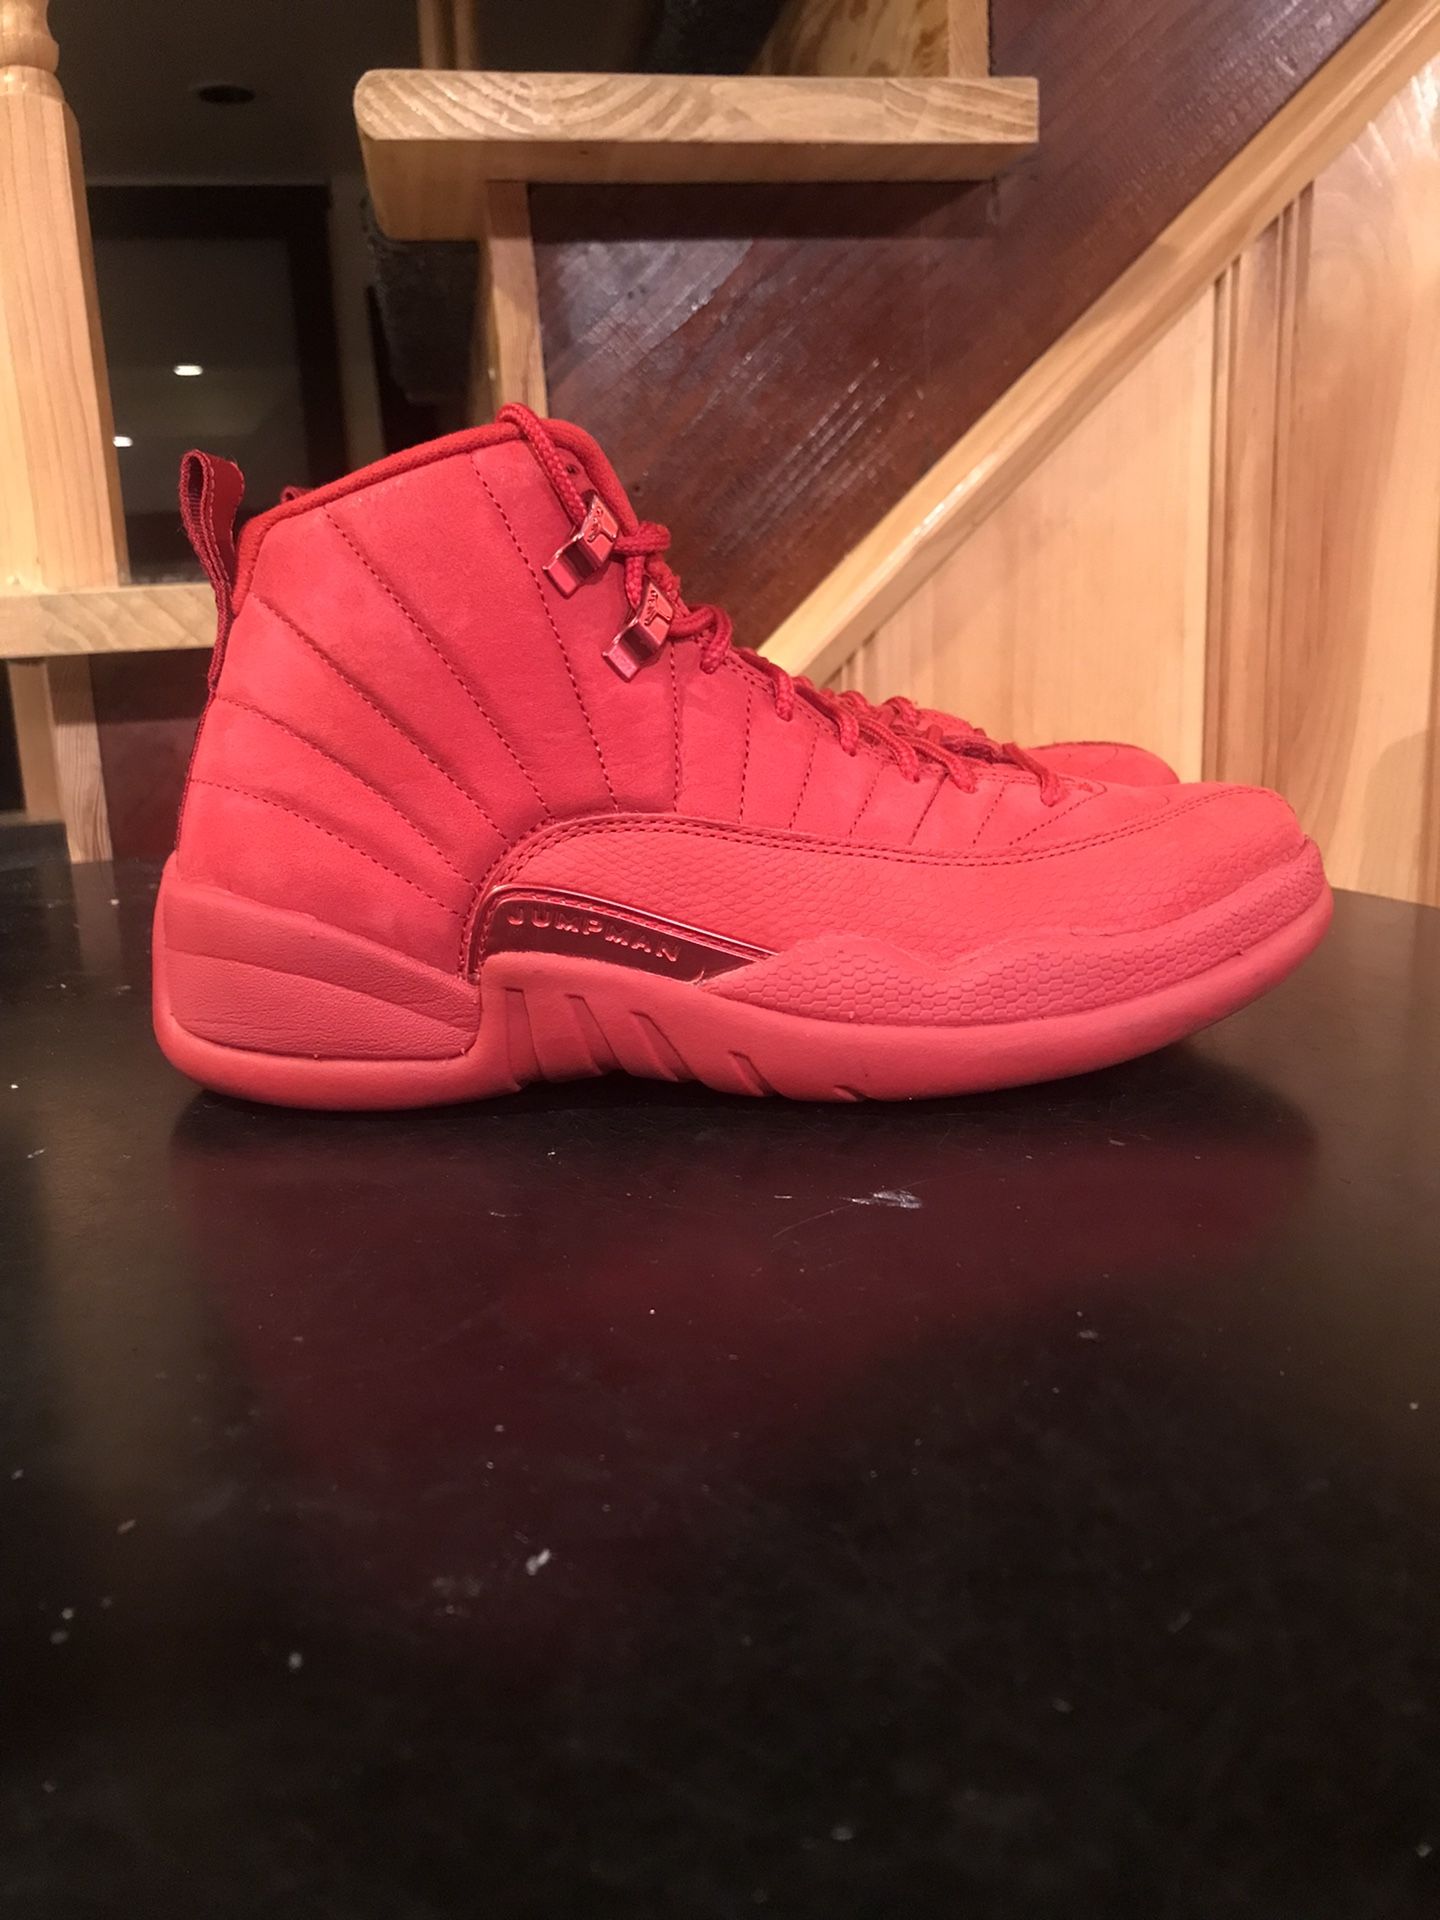 Jordan Red 12s Size 7.5